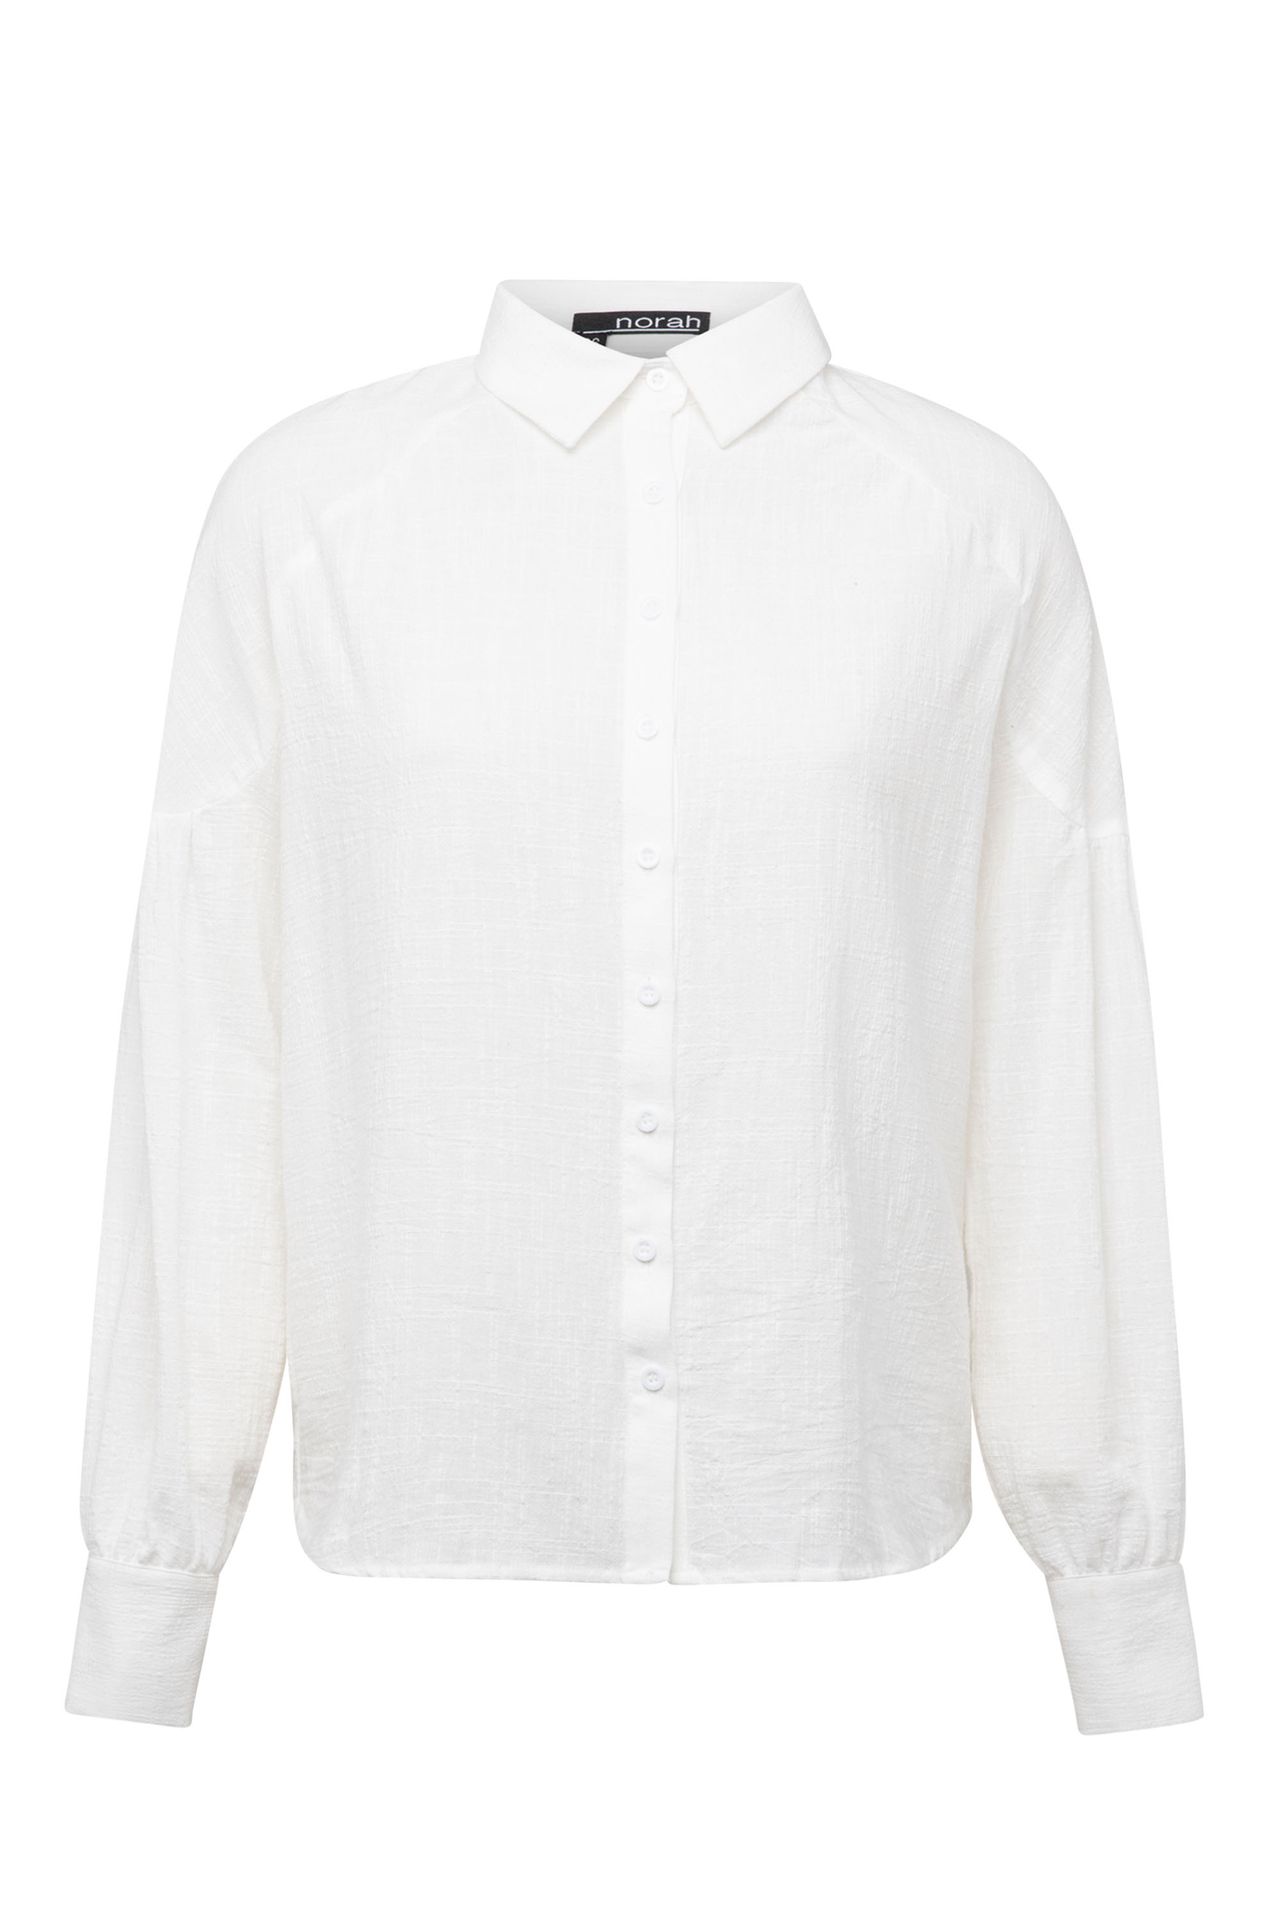 Norah Witte blouse met pofmouwen off-white 213947-101